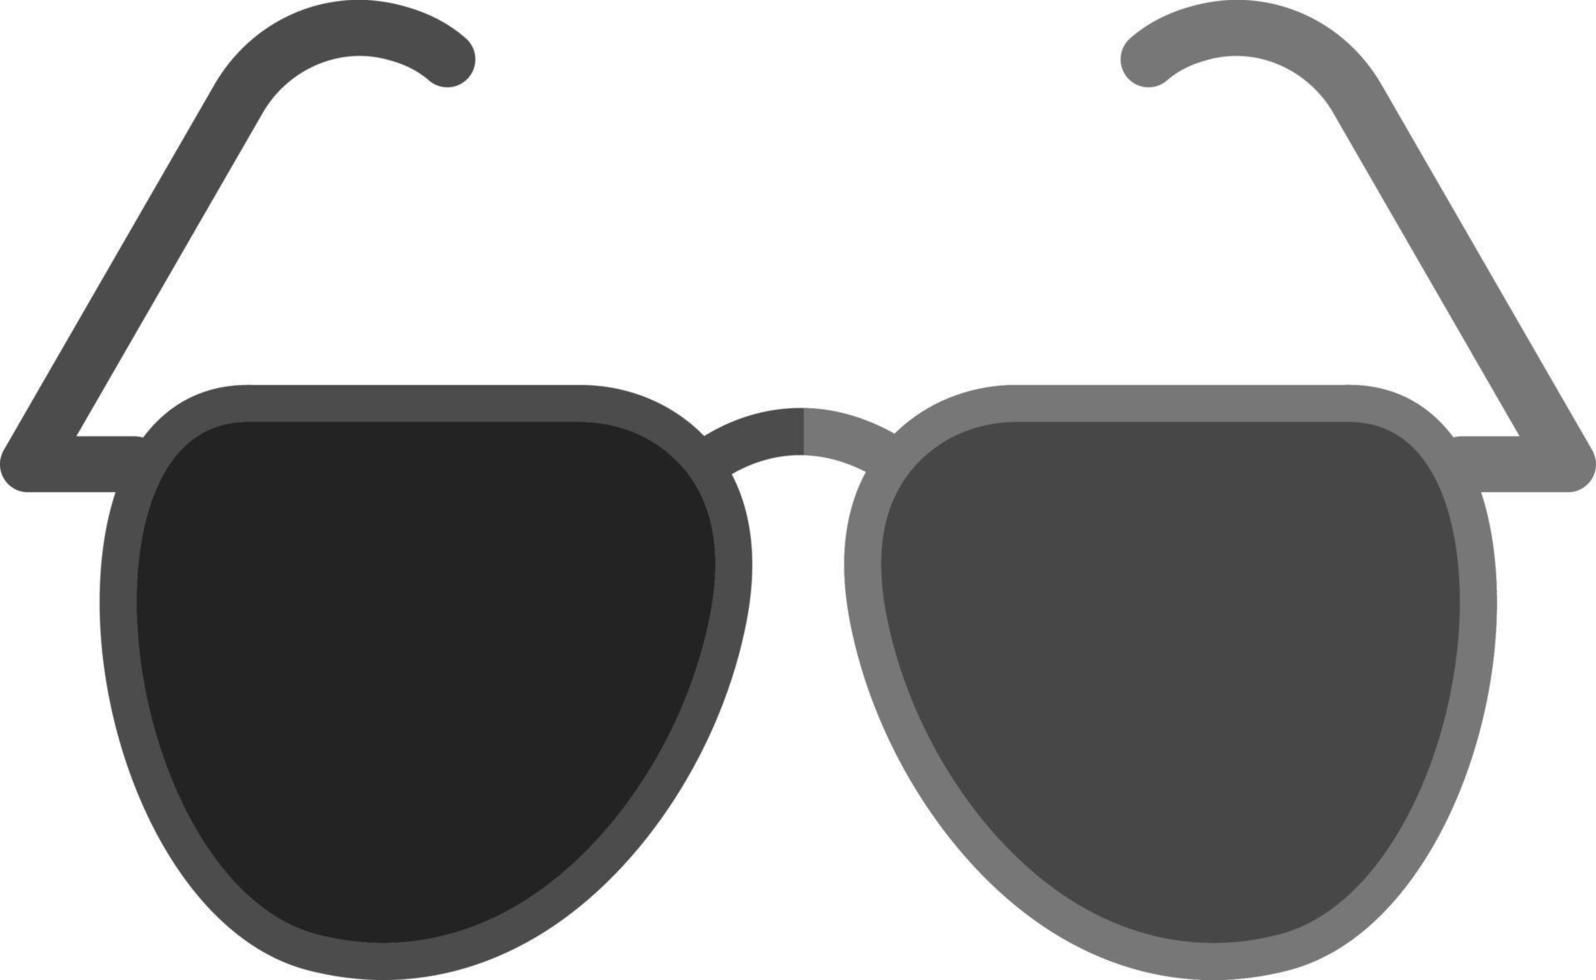 Police sunglasses, illustration, vector on white background.